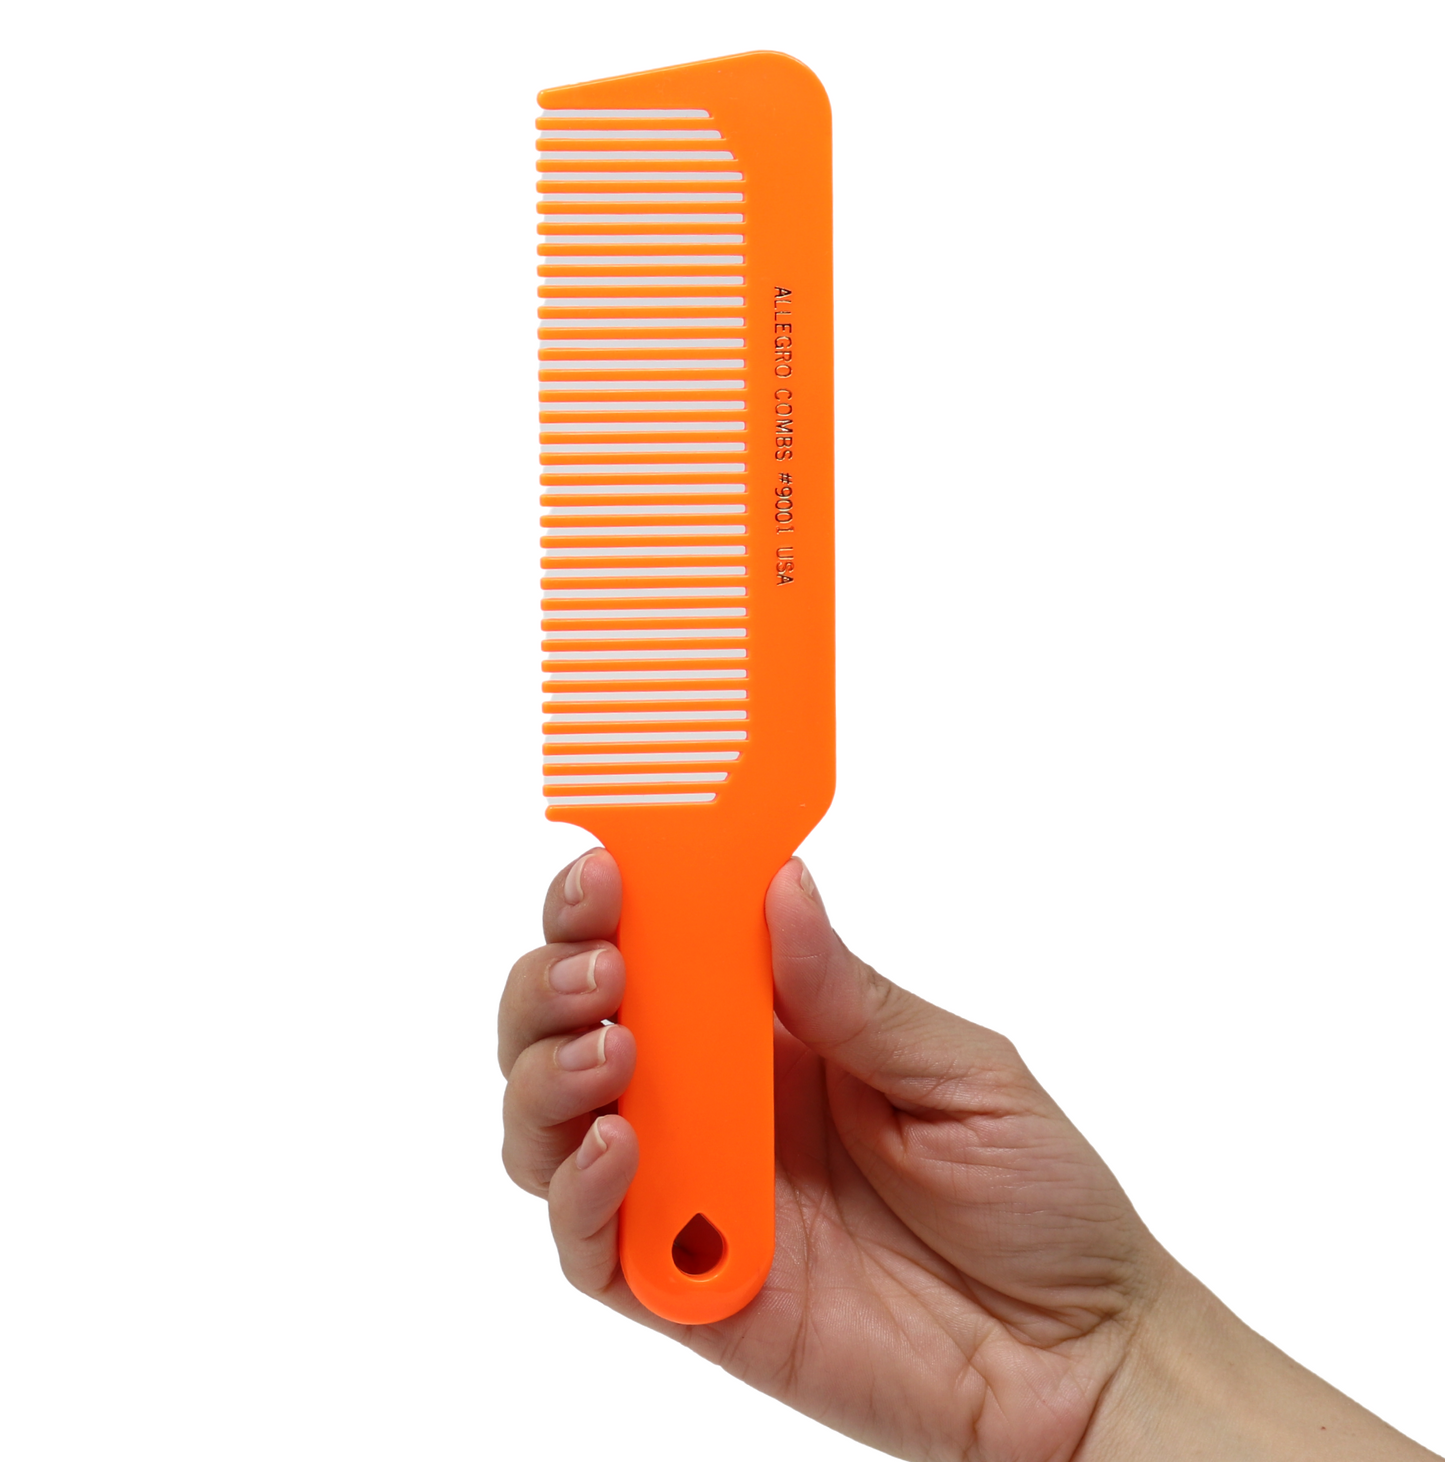 Allegro Combs 9001 Hair Combs Flat Top Clipper Blending Fading Combs Cutting Barber Flattop Thinning Hair Combs 1 Pc.